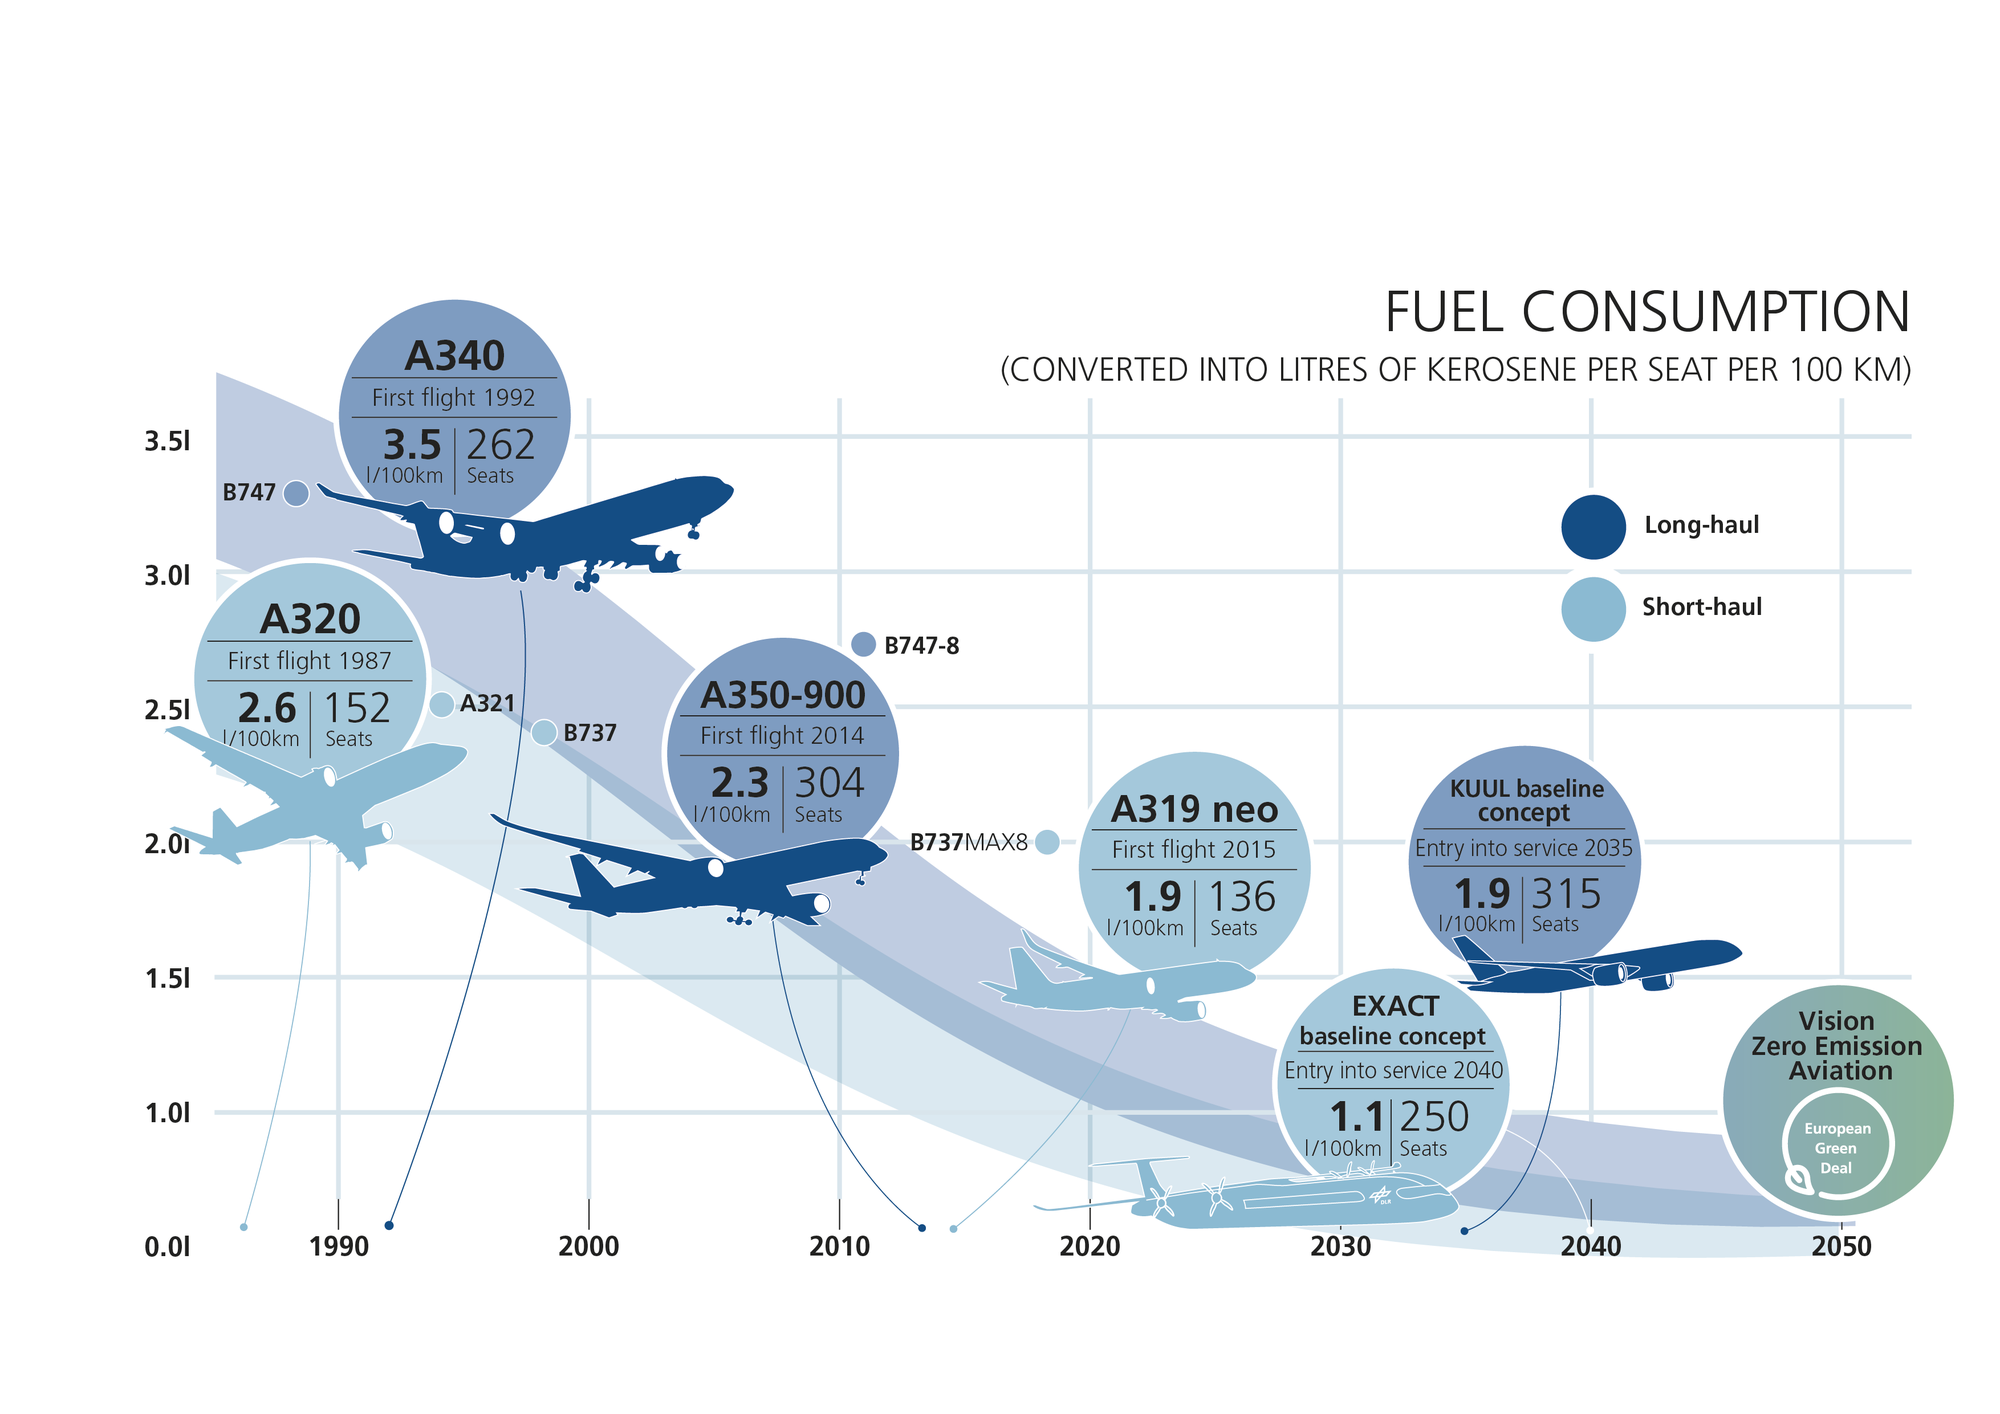 Reduction in fuel consumption